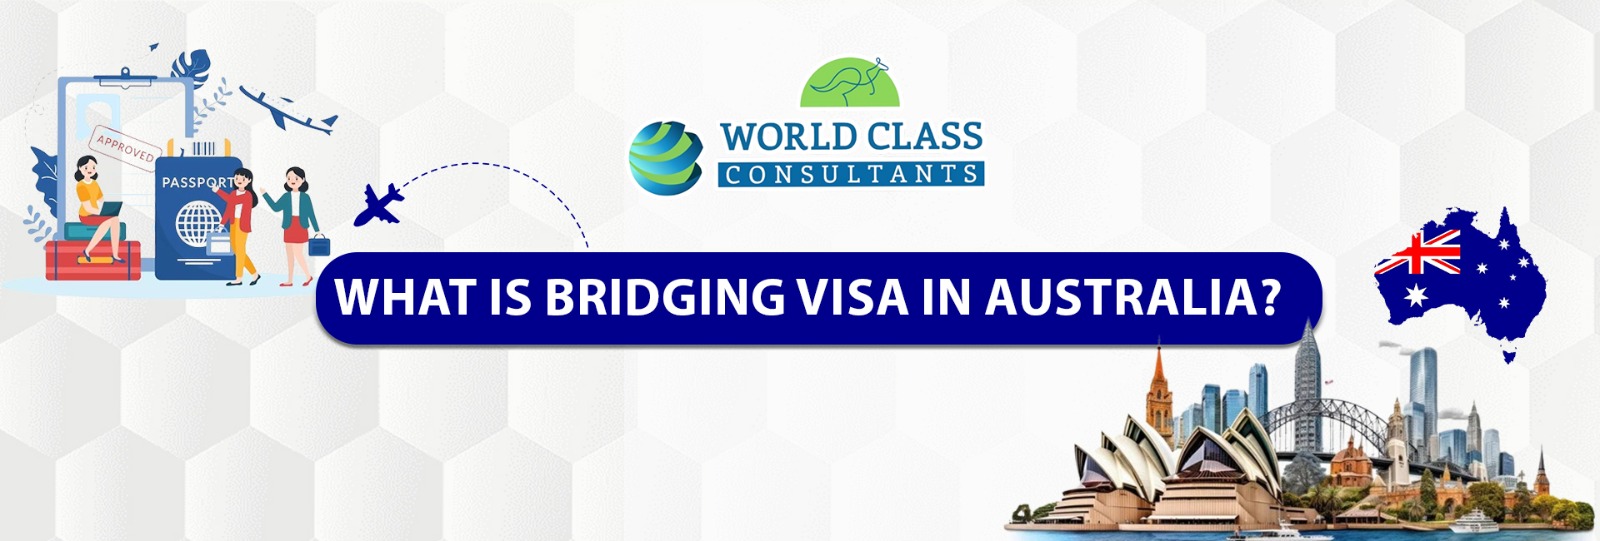 Illustration showing Bridging Visas as a bridge between old and new visas.